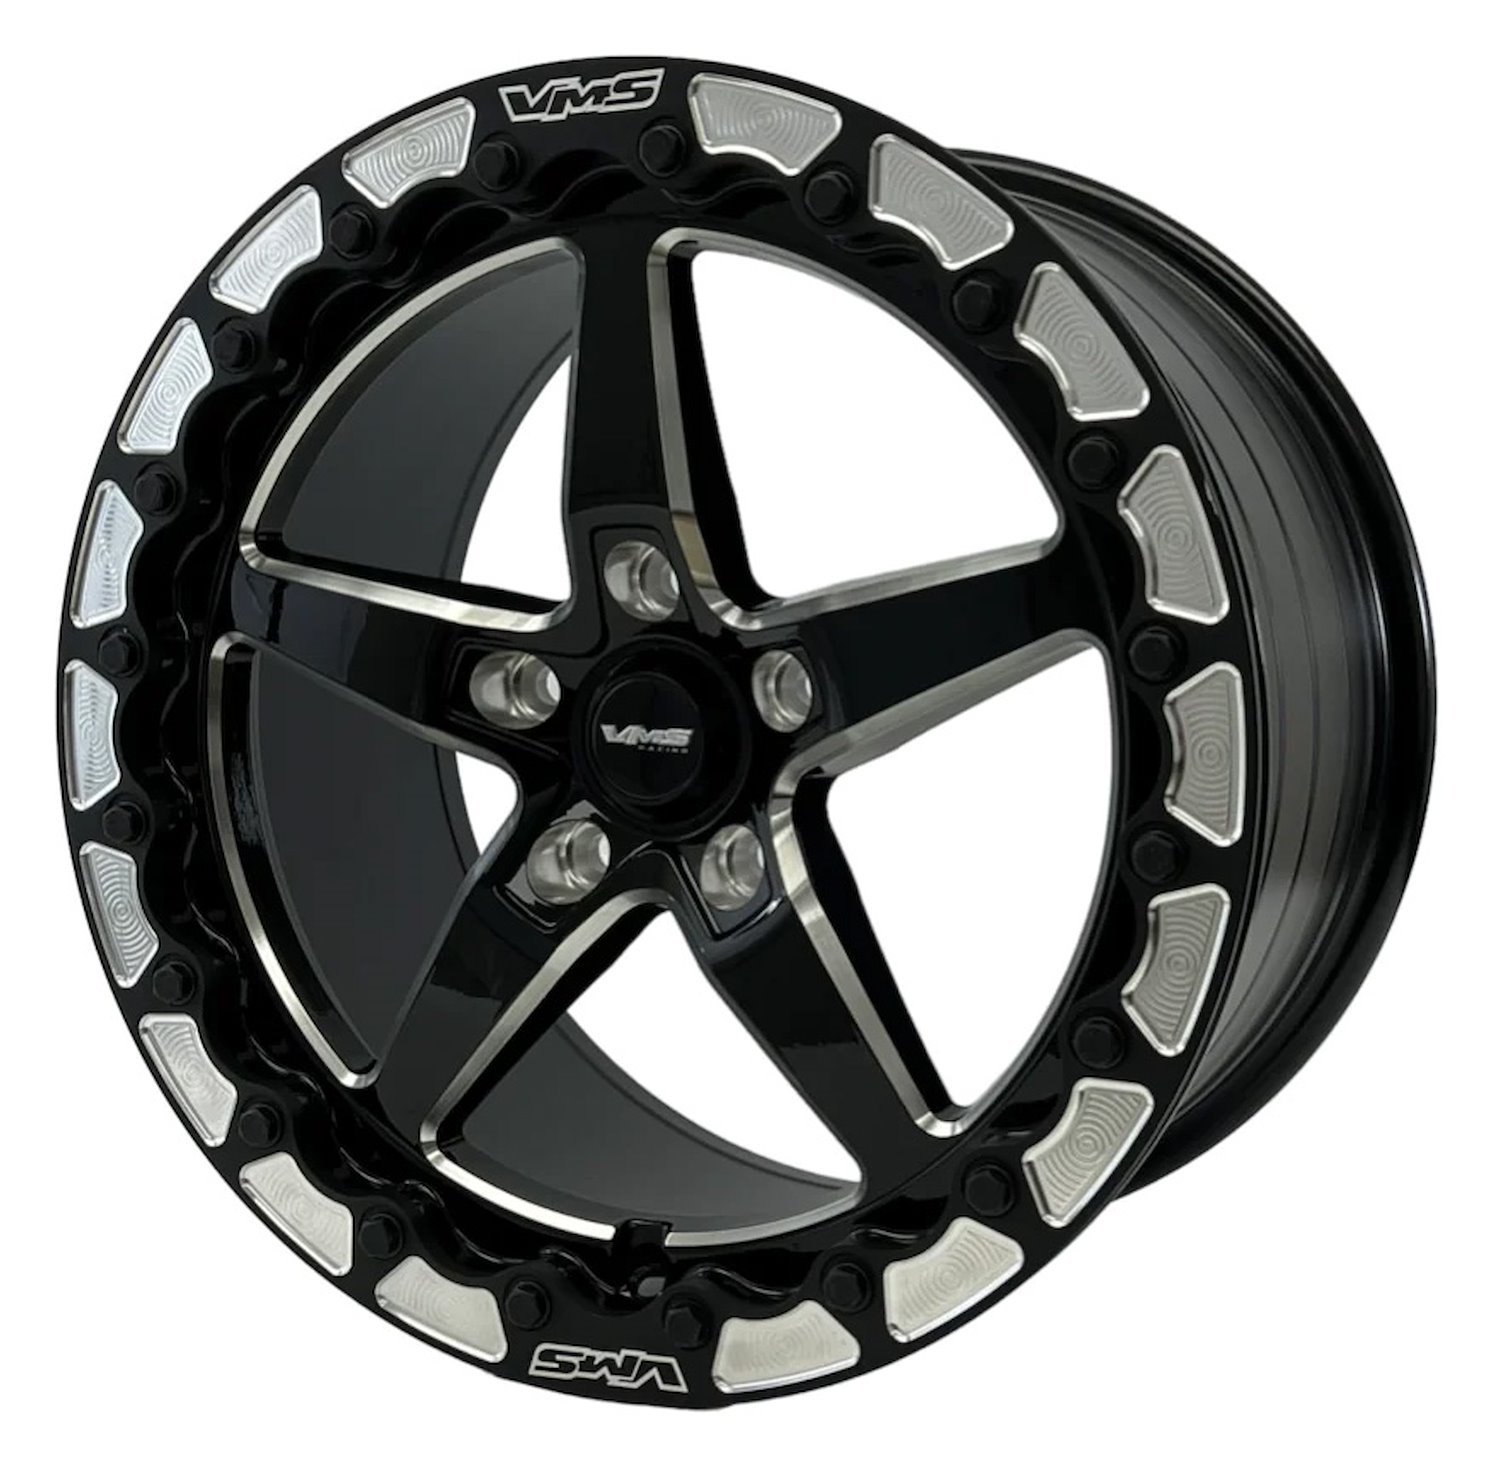 VWST080 V-Star Wheel, Size: 17" x 10", Bolt Pattern: 5 x 4 1/2" (114.3 mm) [Finish: Gloss Black Milled]